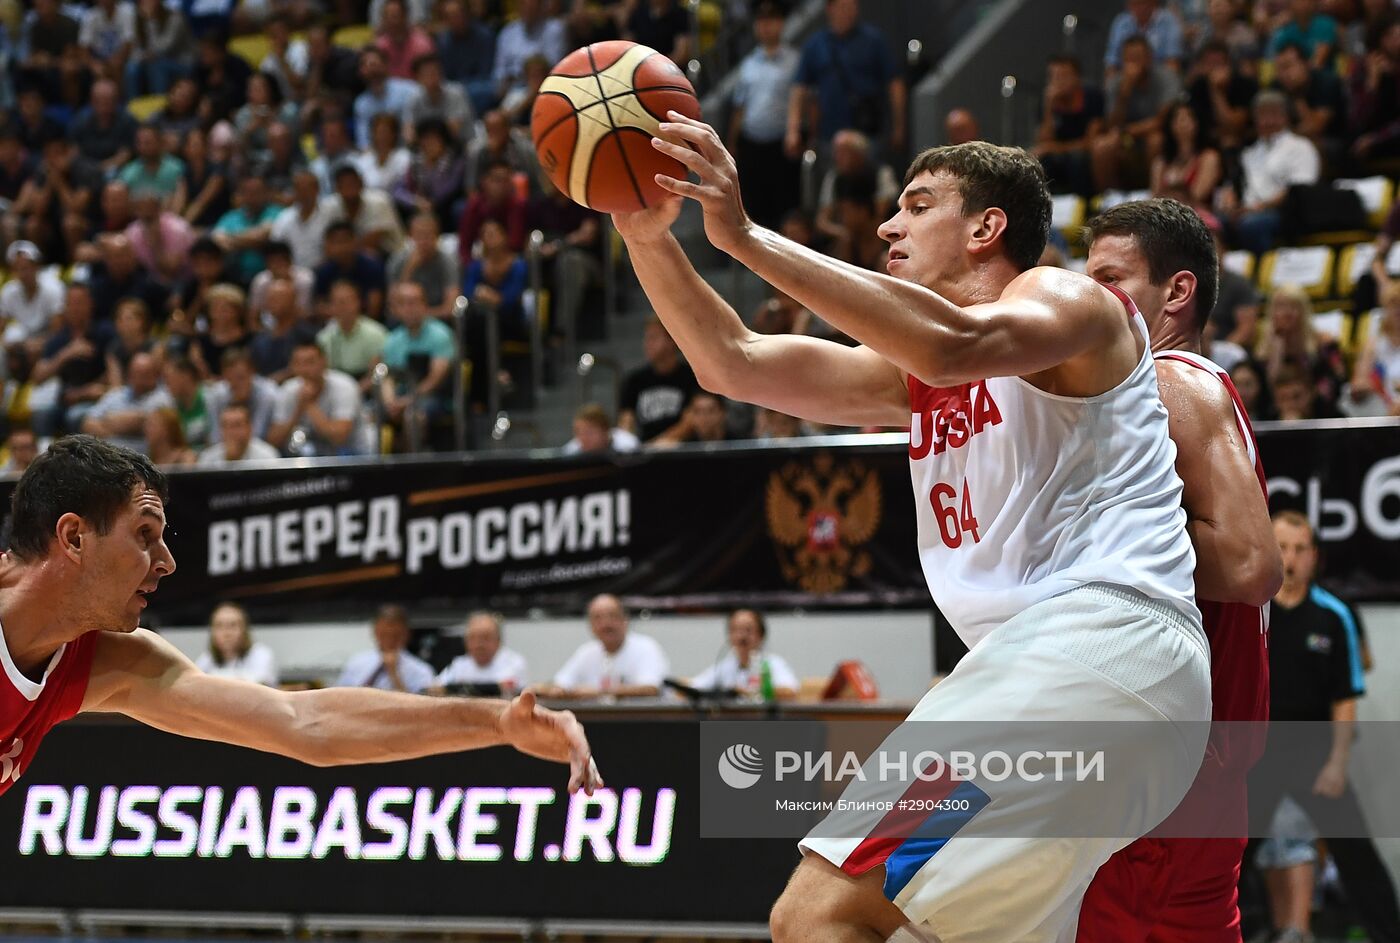 Баскетбол. Мужчины. Товарищеский матч Россия - Белоруссия